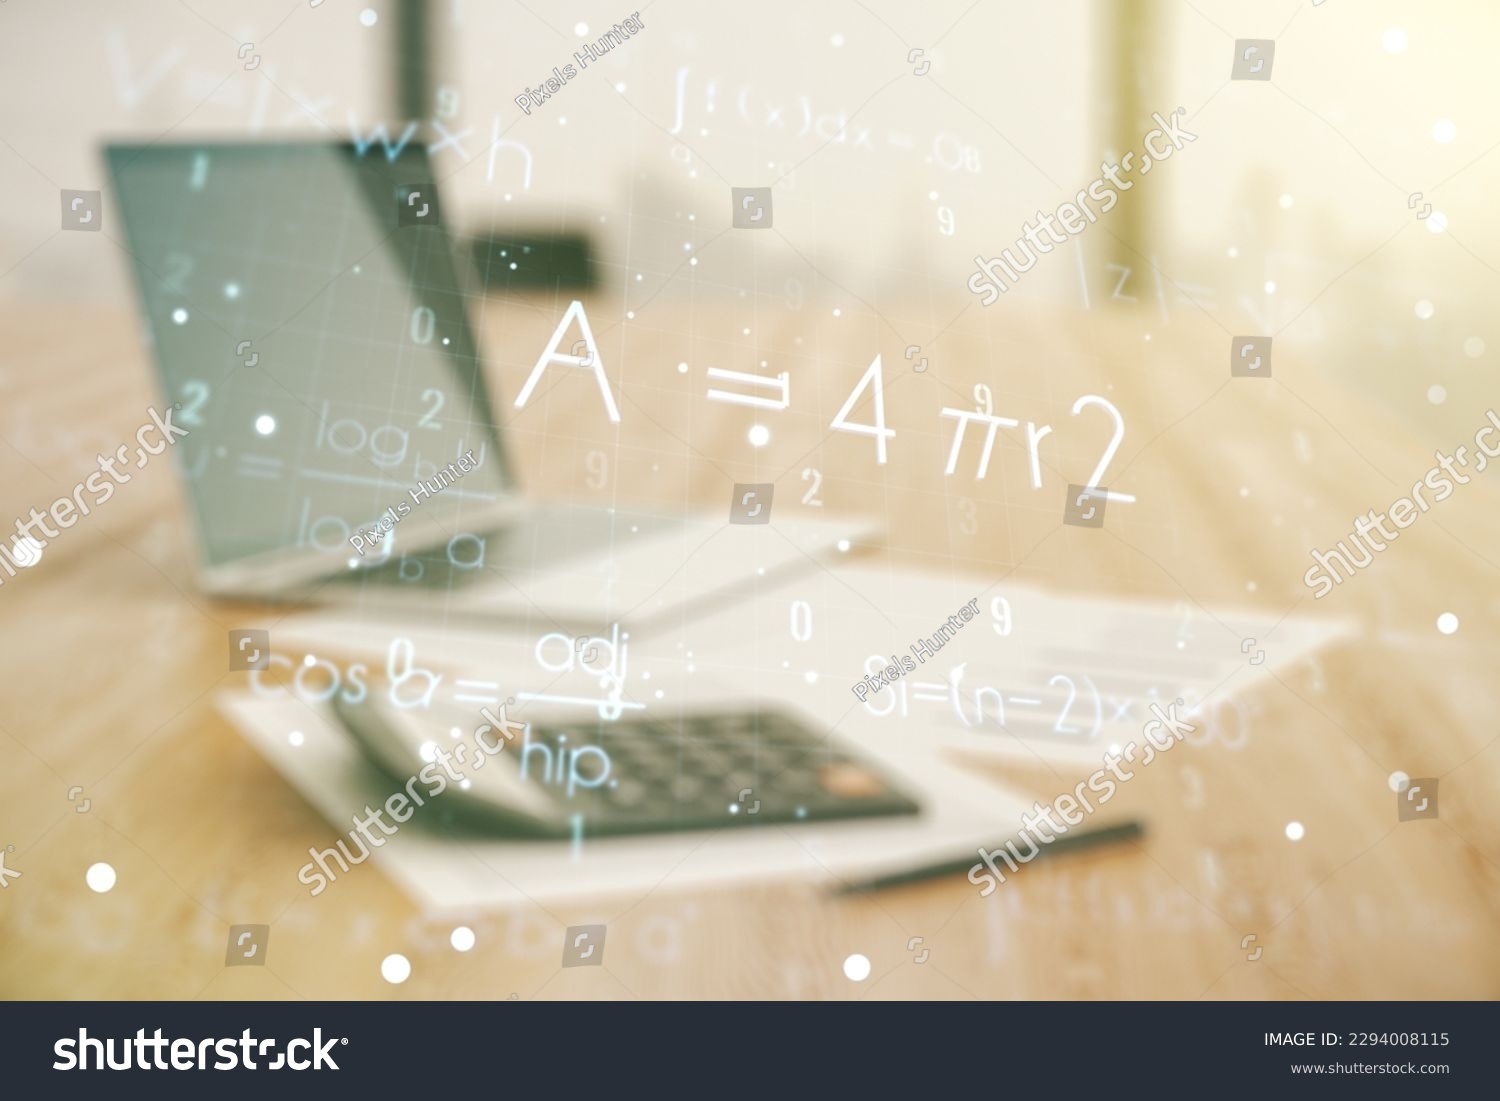 Scientific formula hologram on calculator and pc background, research concept. Multiexposure #2294008115